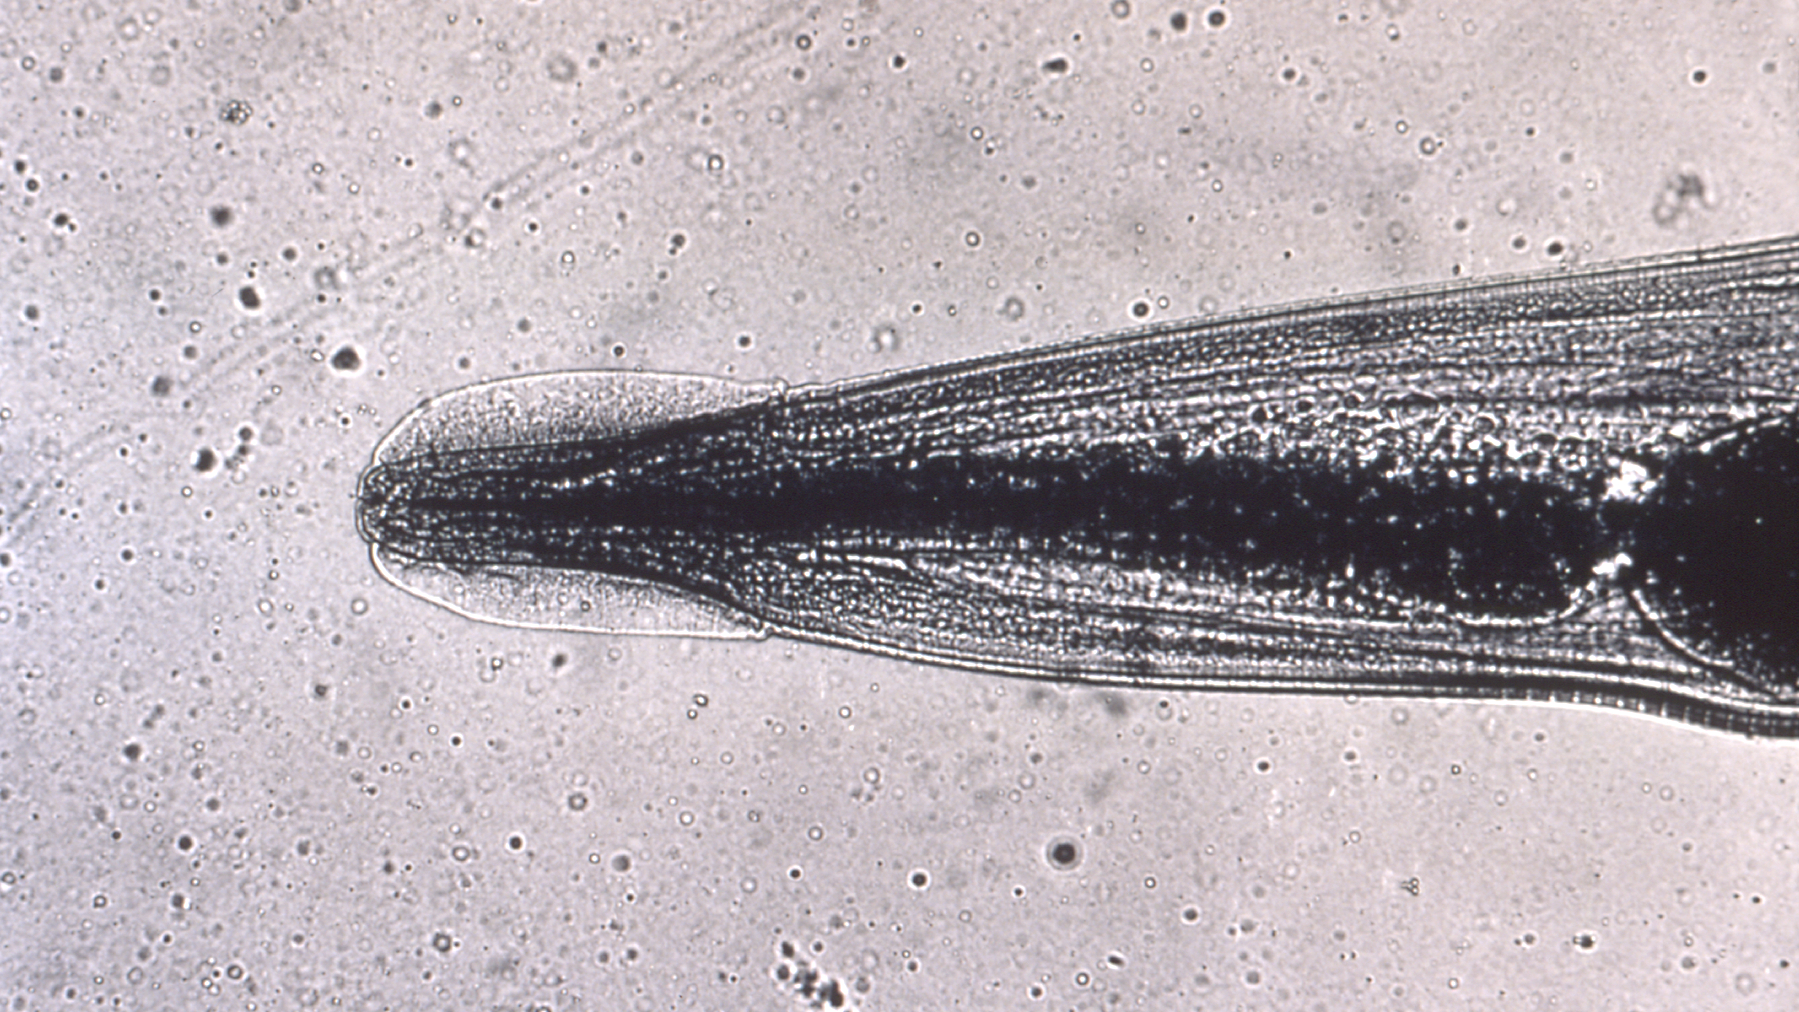 A close-up image of the parasite, Enterobius vermicularis, or human pinworm.